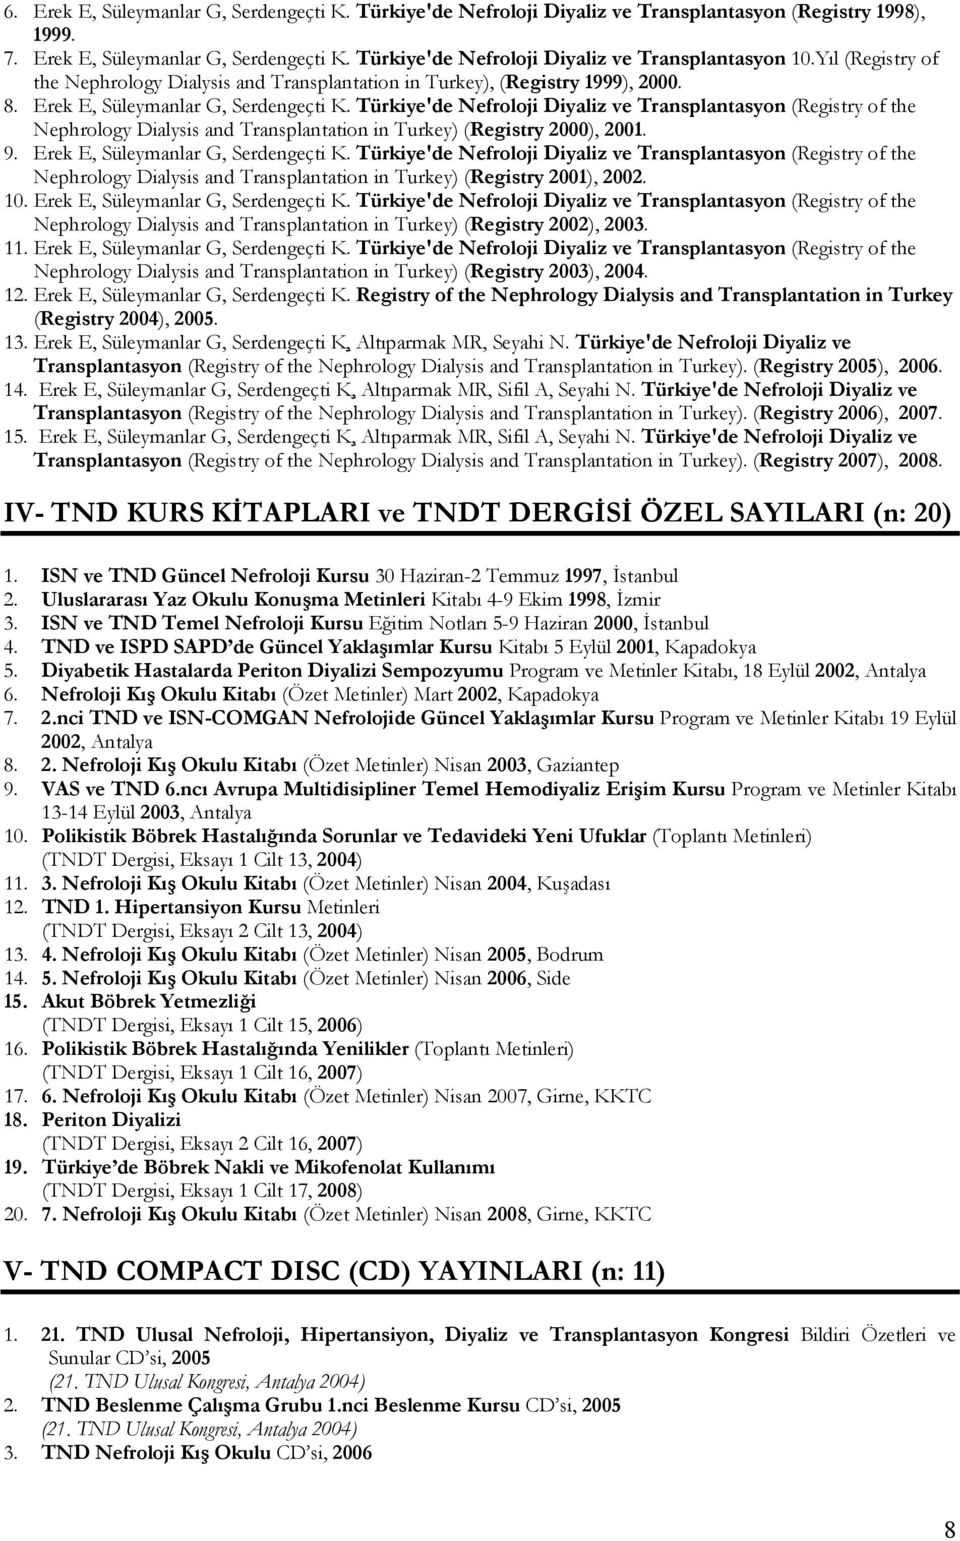 Türkiye'de Nefroloji Diyaliz ve Transplantasyon (Registry of the Nephrology Dialysis and Transplantation in Turkey) (Registry 2000), 2001. 9. Erek E, Süleymanlar G, Serdengeçti K.